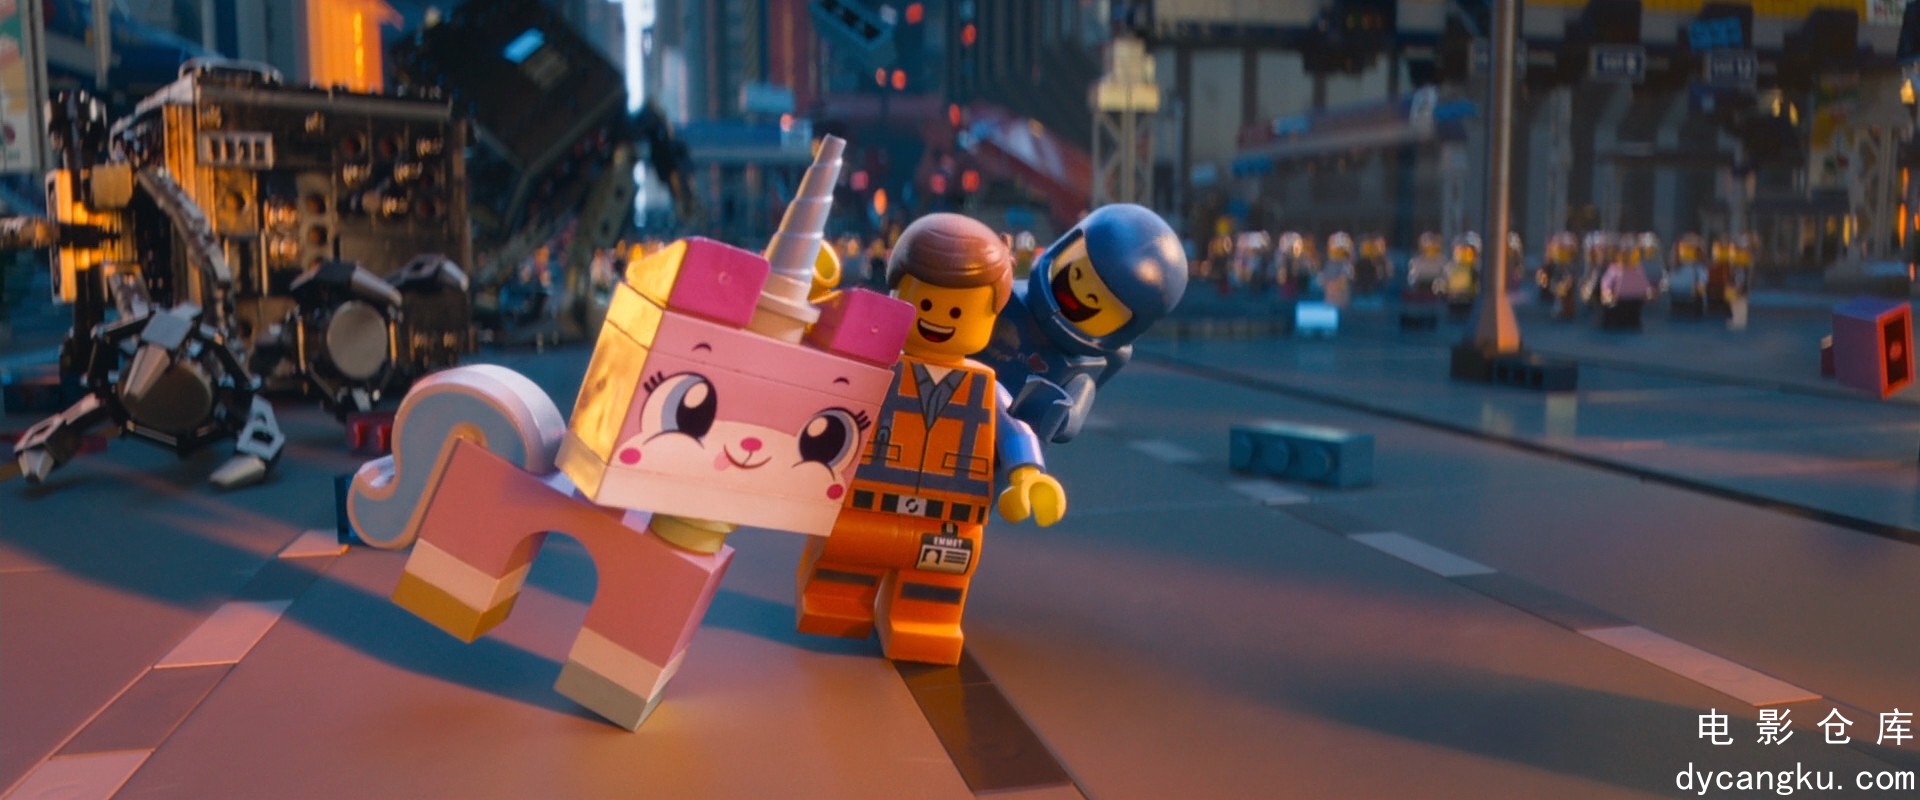 [电影仓库dycangku.com]The.Lego.Movie.2014.1080p.BluRay.x264.DTS.mkv_snapshot_01..jpg